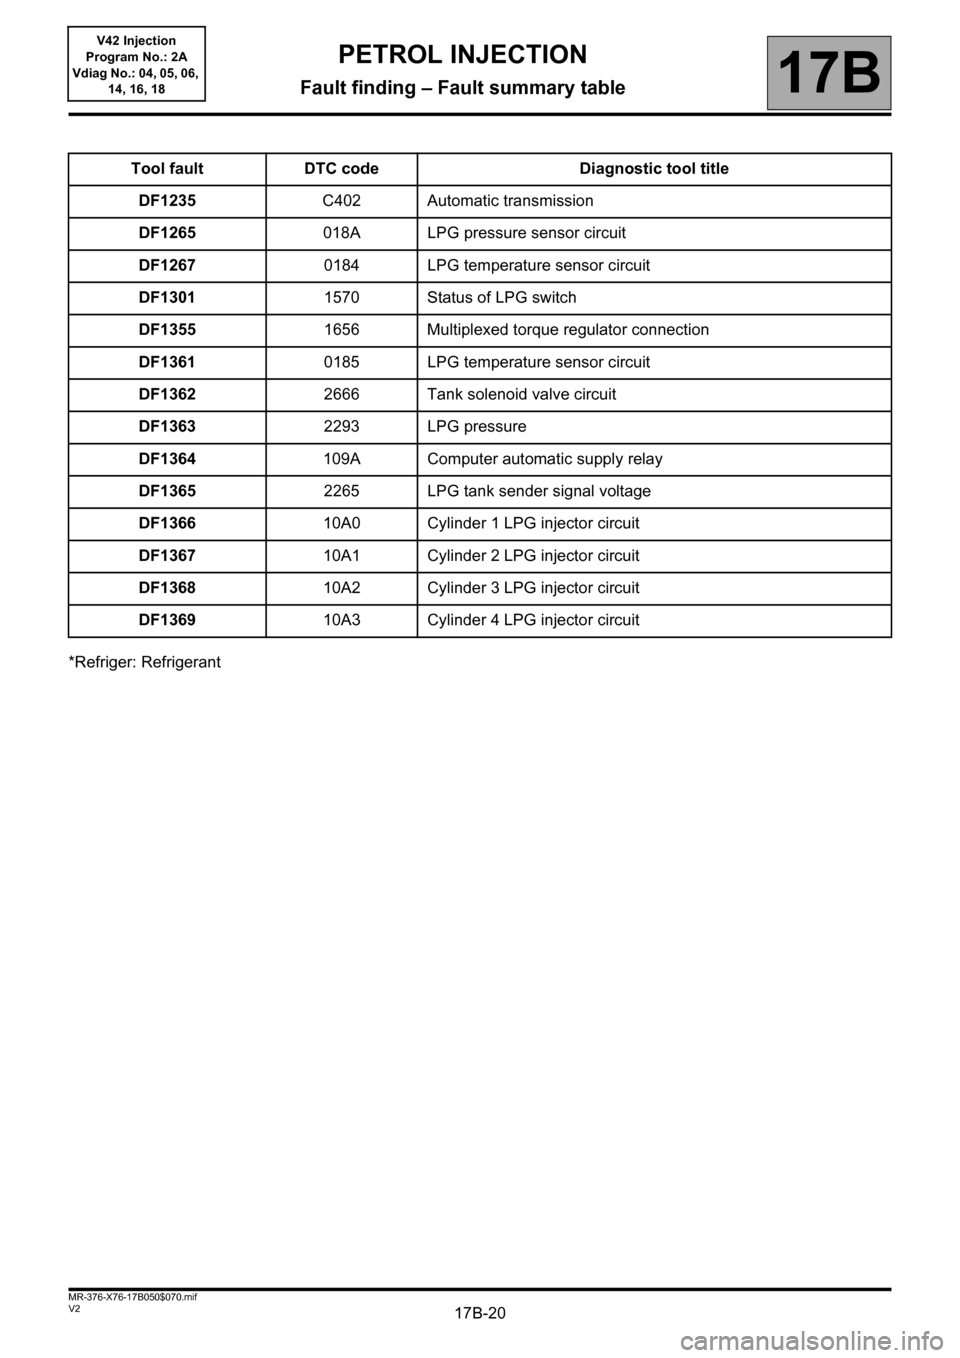 RENAULT KANGOO 2013 X61 / 2.G Petrol V42 Injection Workshop Manual 17B-20V2 MR-376-X76-17B050$070.mif
PETROL INJECTION
Fault finding – Fault summary table17B
V42 Injection
Program No.: 2A
Vdiag No.: 04, 05, 06, 
14, 16, 18
*Refriger: RefrigerantTool fault DTC code 